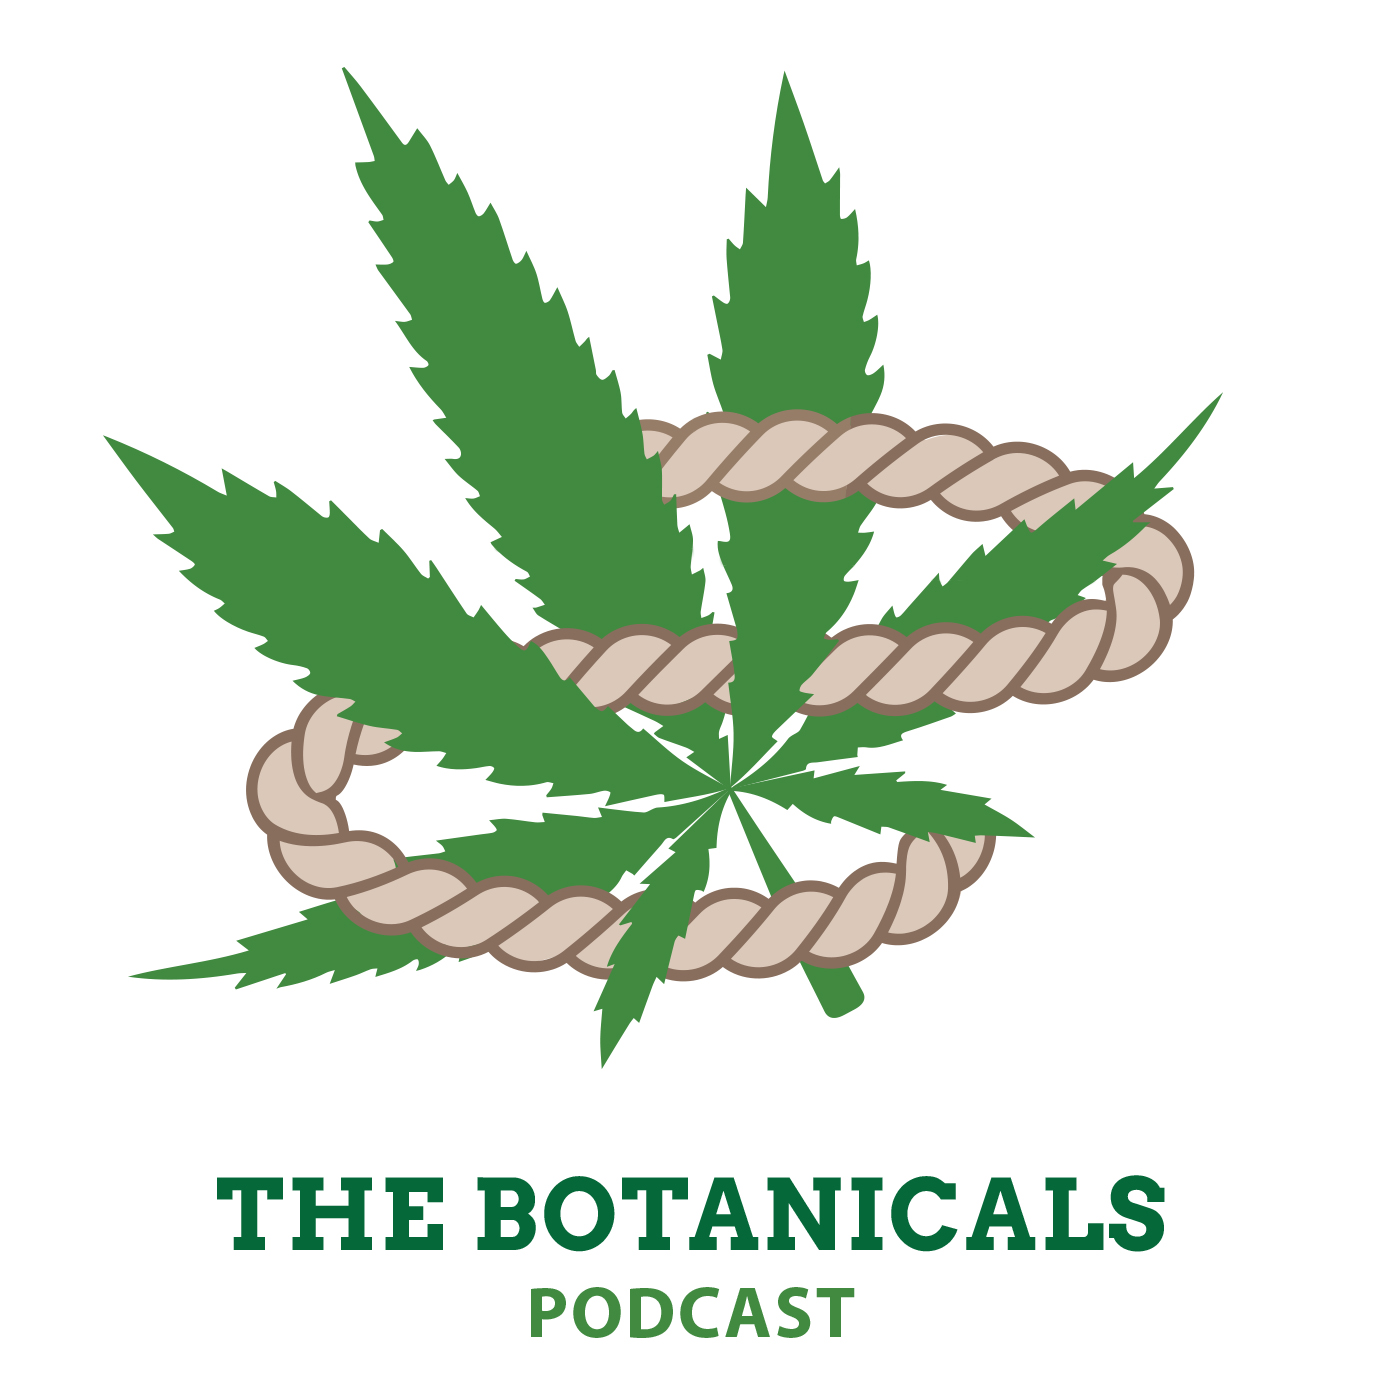 The Botanicals Podcast